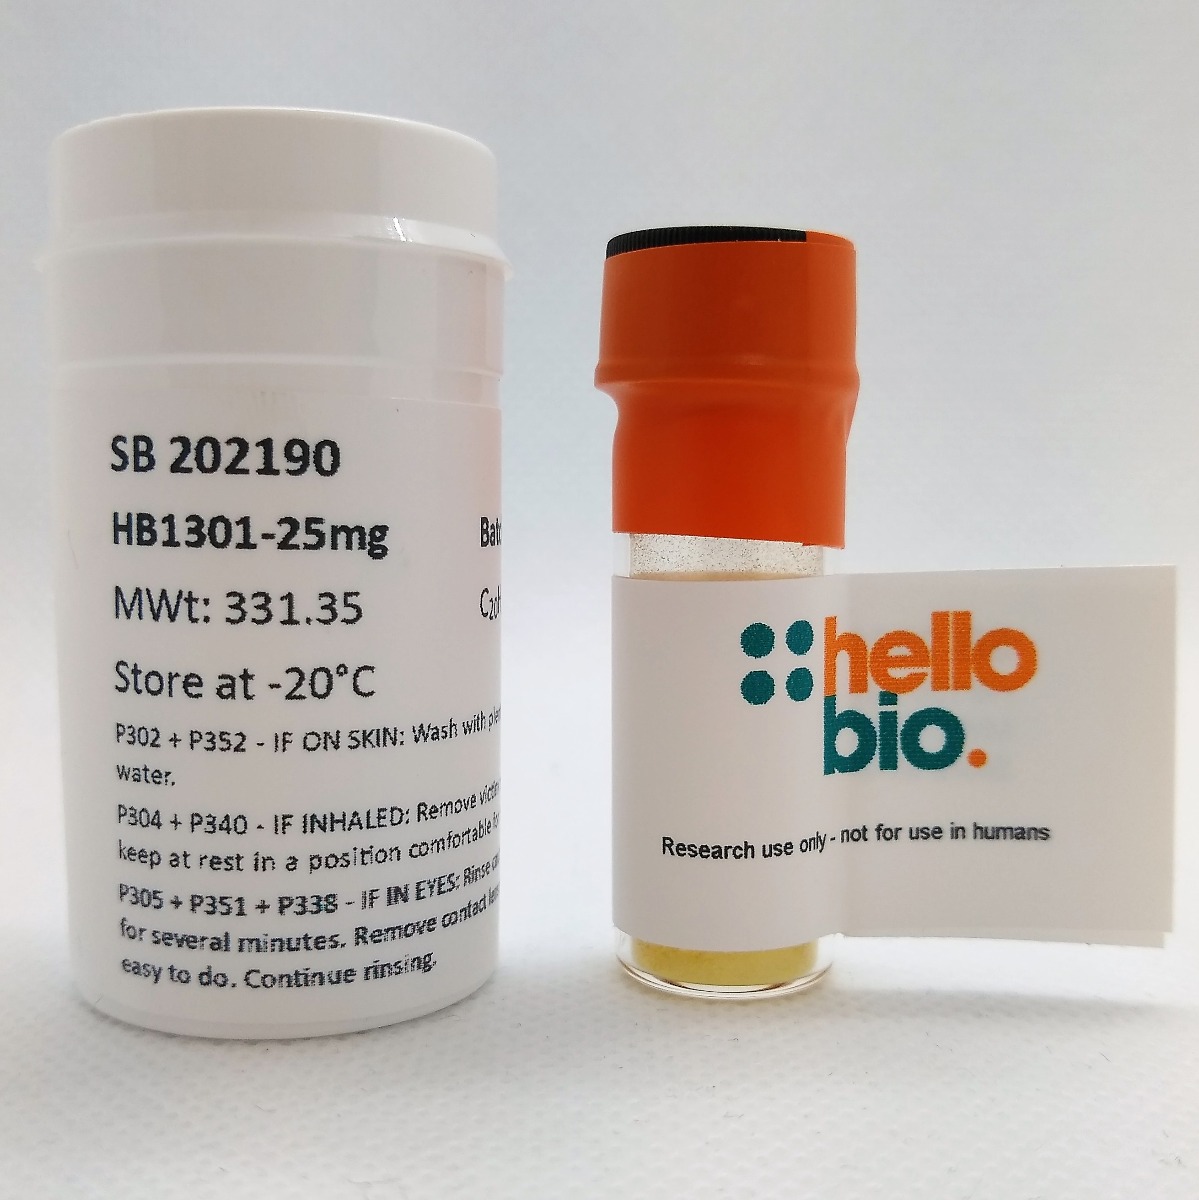 SB 202190 product vial image | Hello Bio